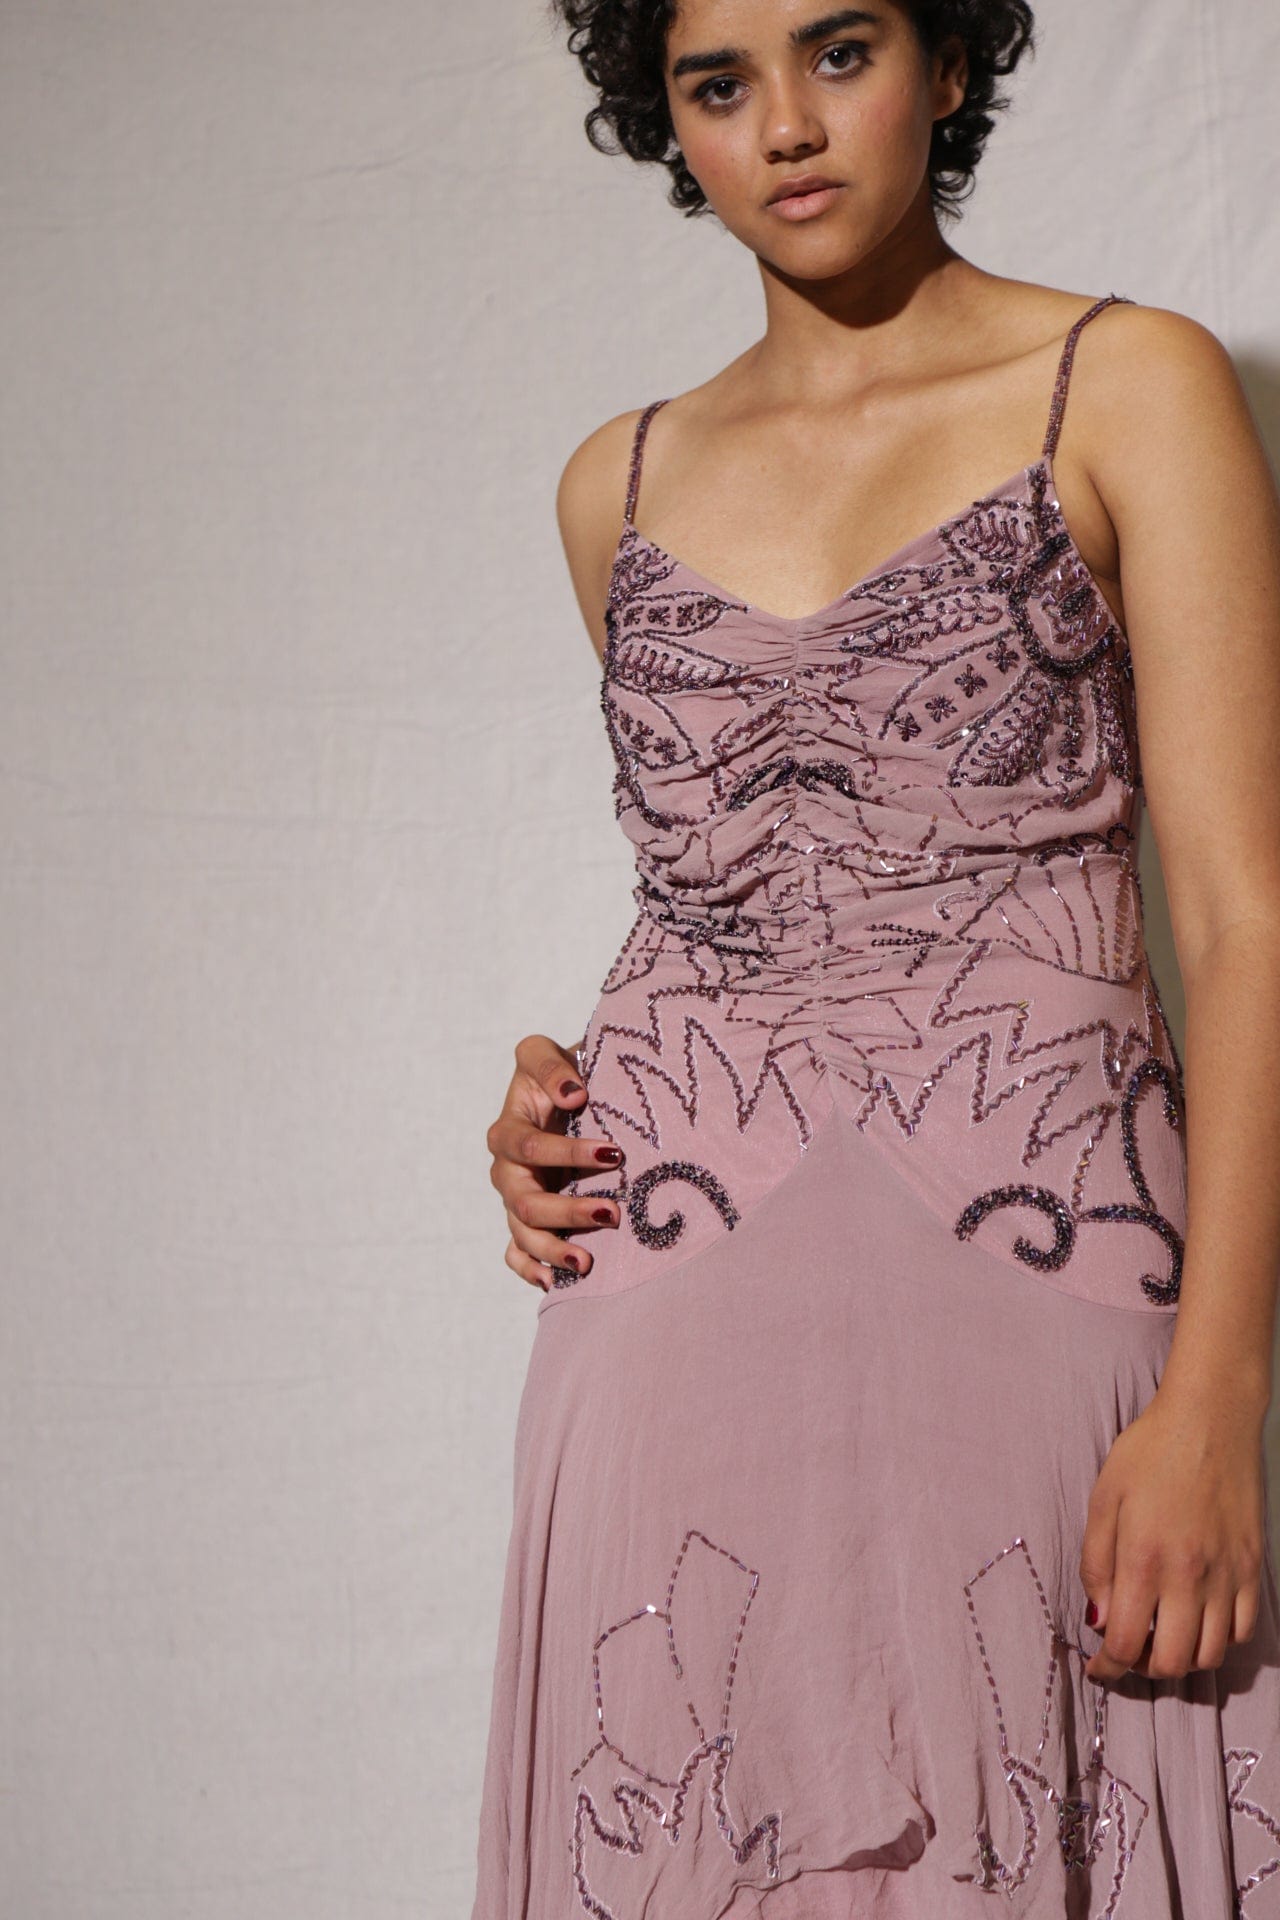 SISTERGOLDEN Dress Lilac Waterfall Vintage Dress